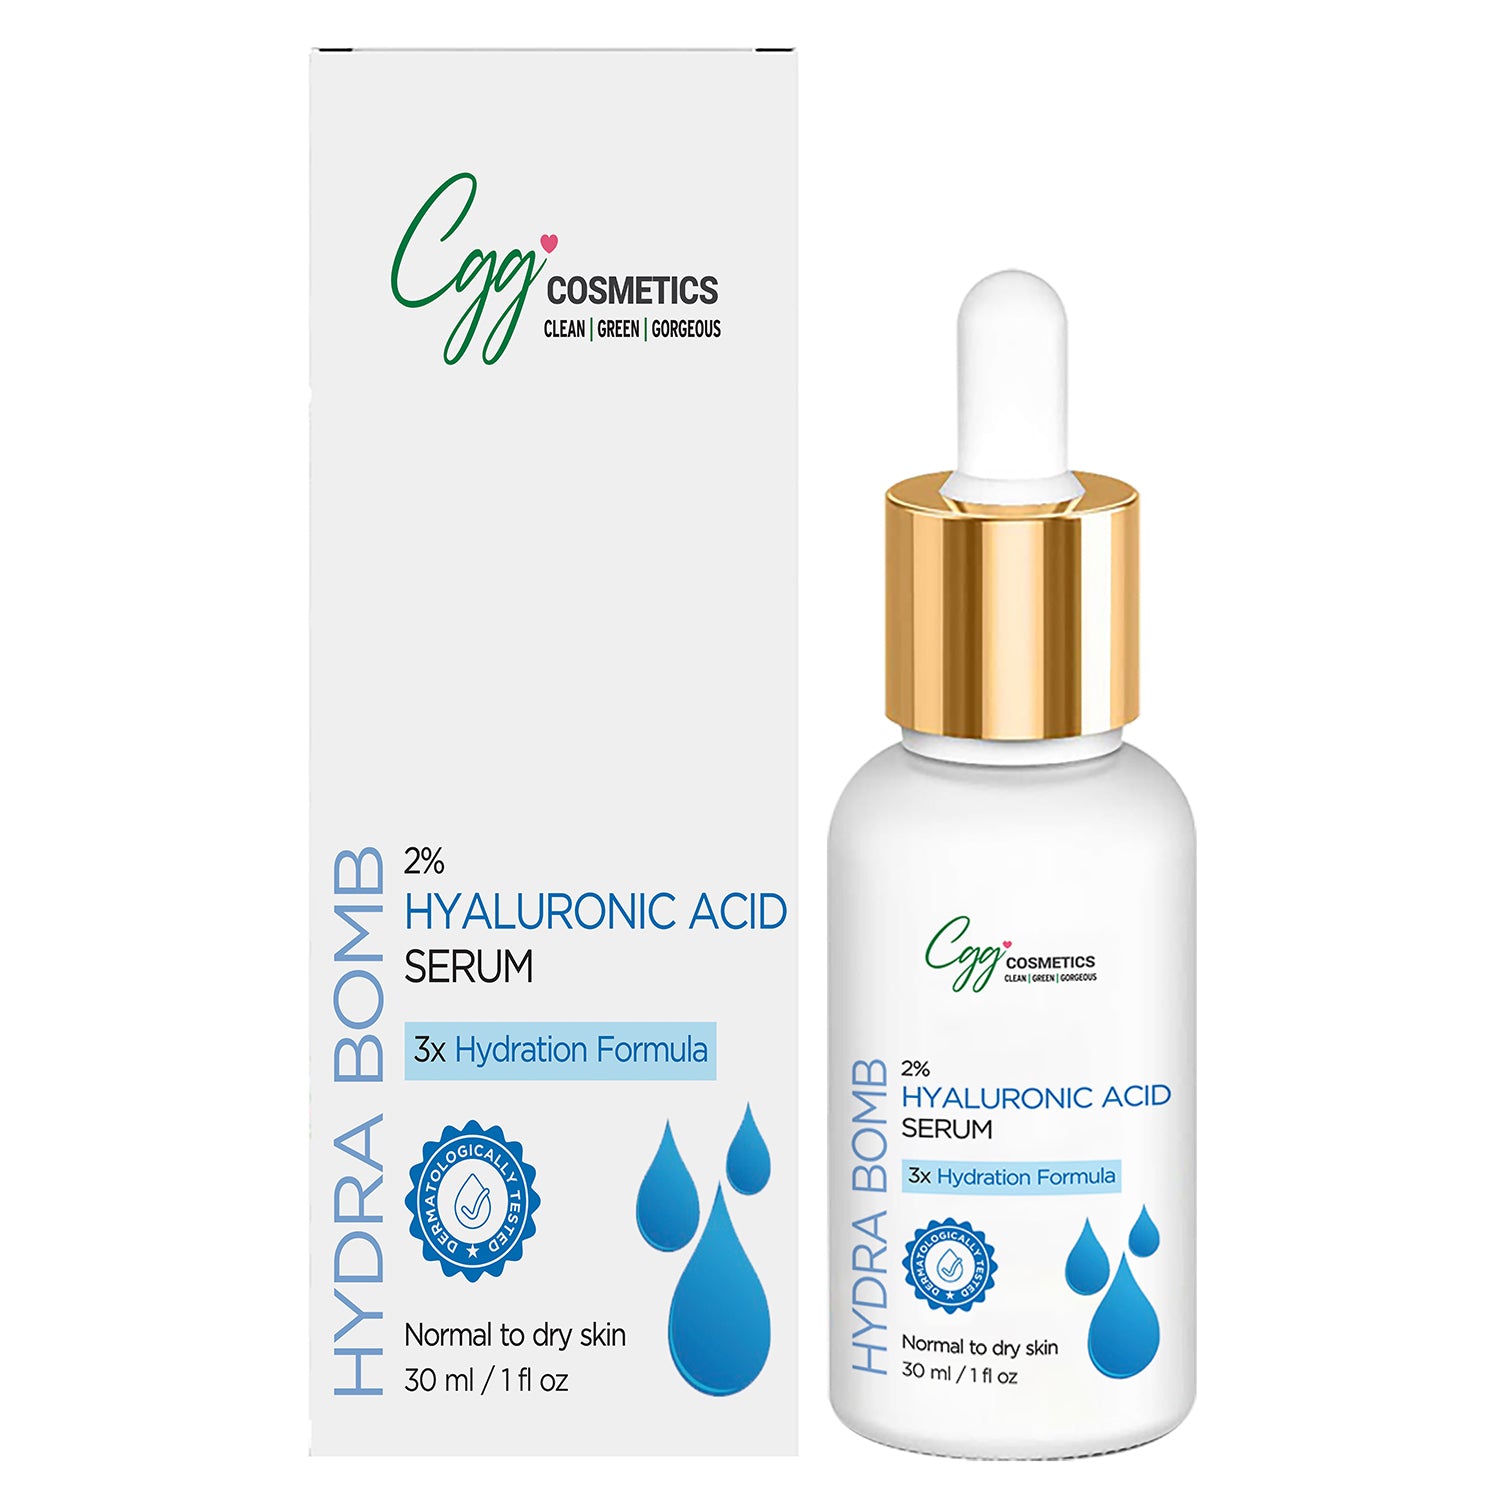 CGG Cosmetics 2% Hyaluronic Acid Serum – 3X Hydration Formula - 30ml